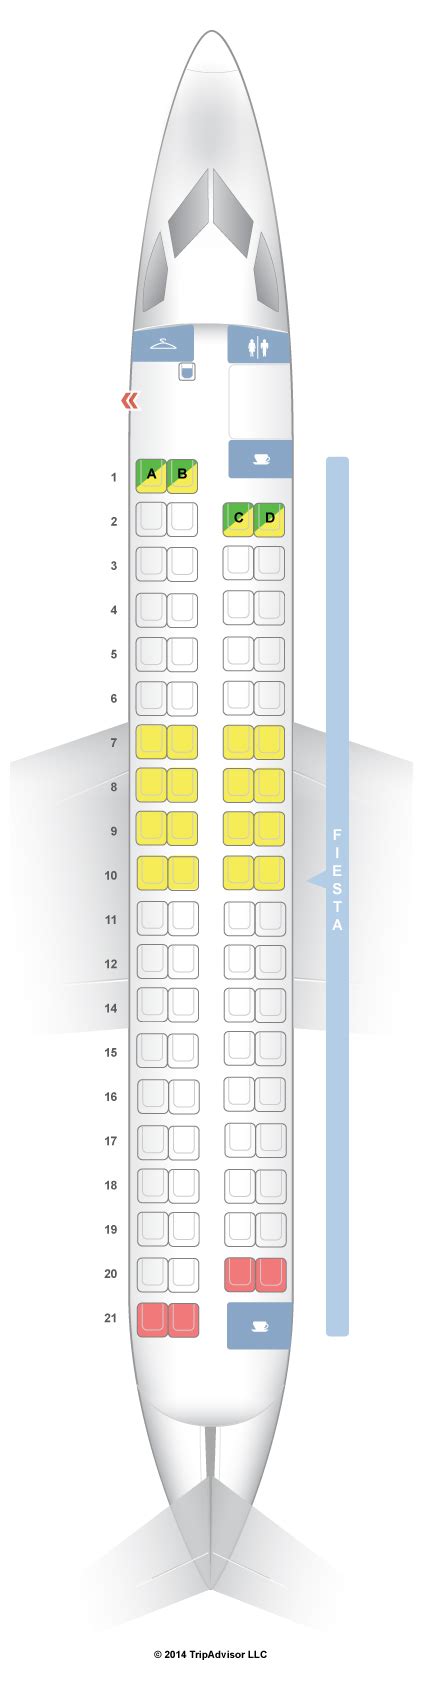 Seatguru Seat Map Philippine Airlines